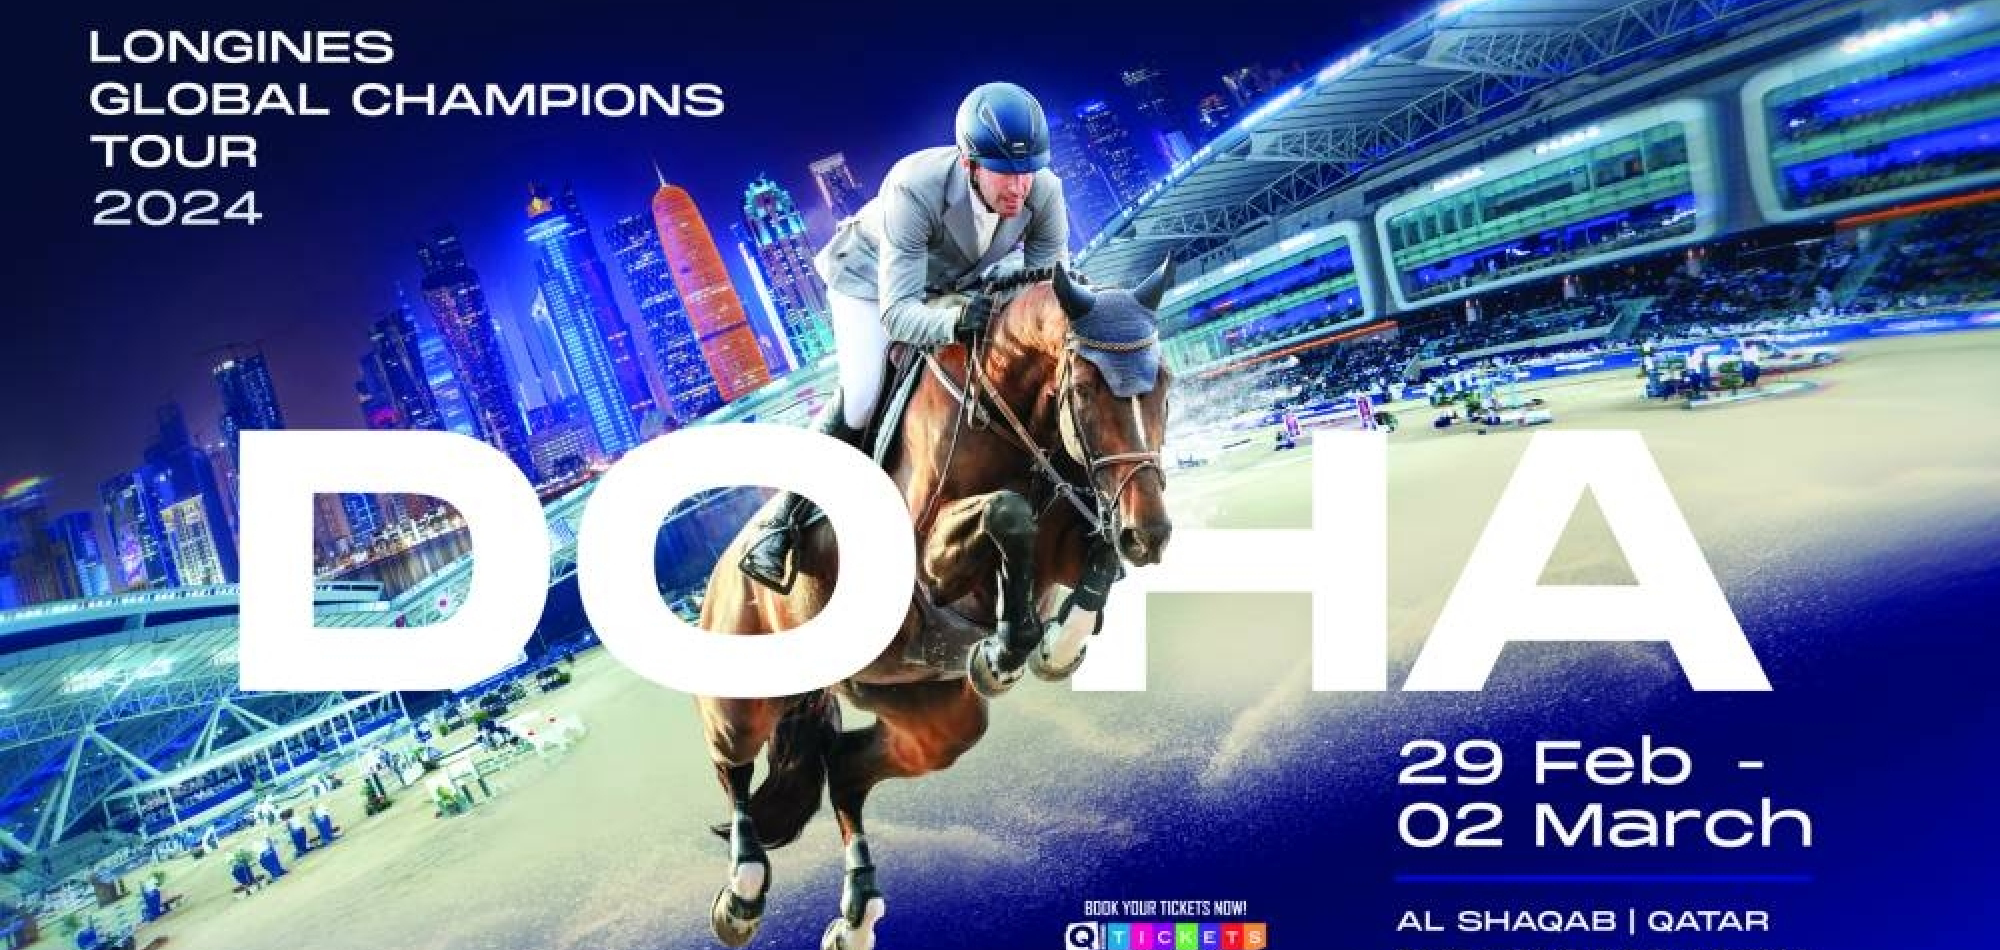 Global Champions Tour returns to Qatar for 2024 season kick off